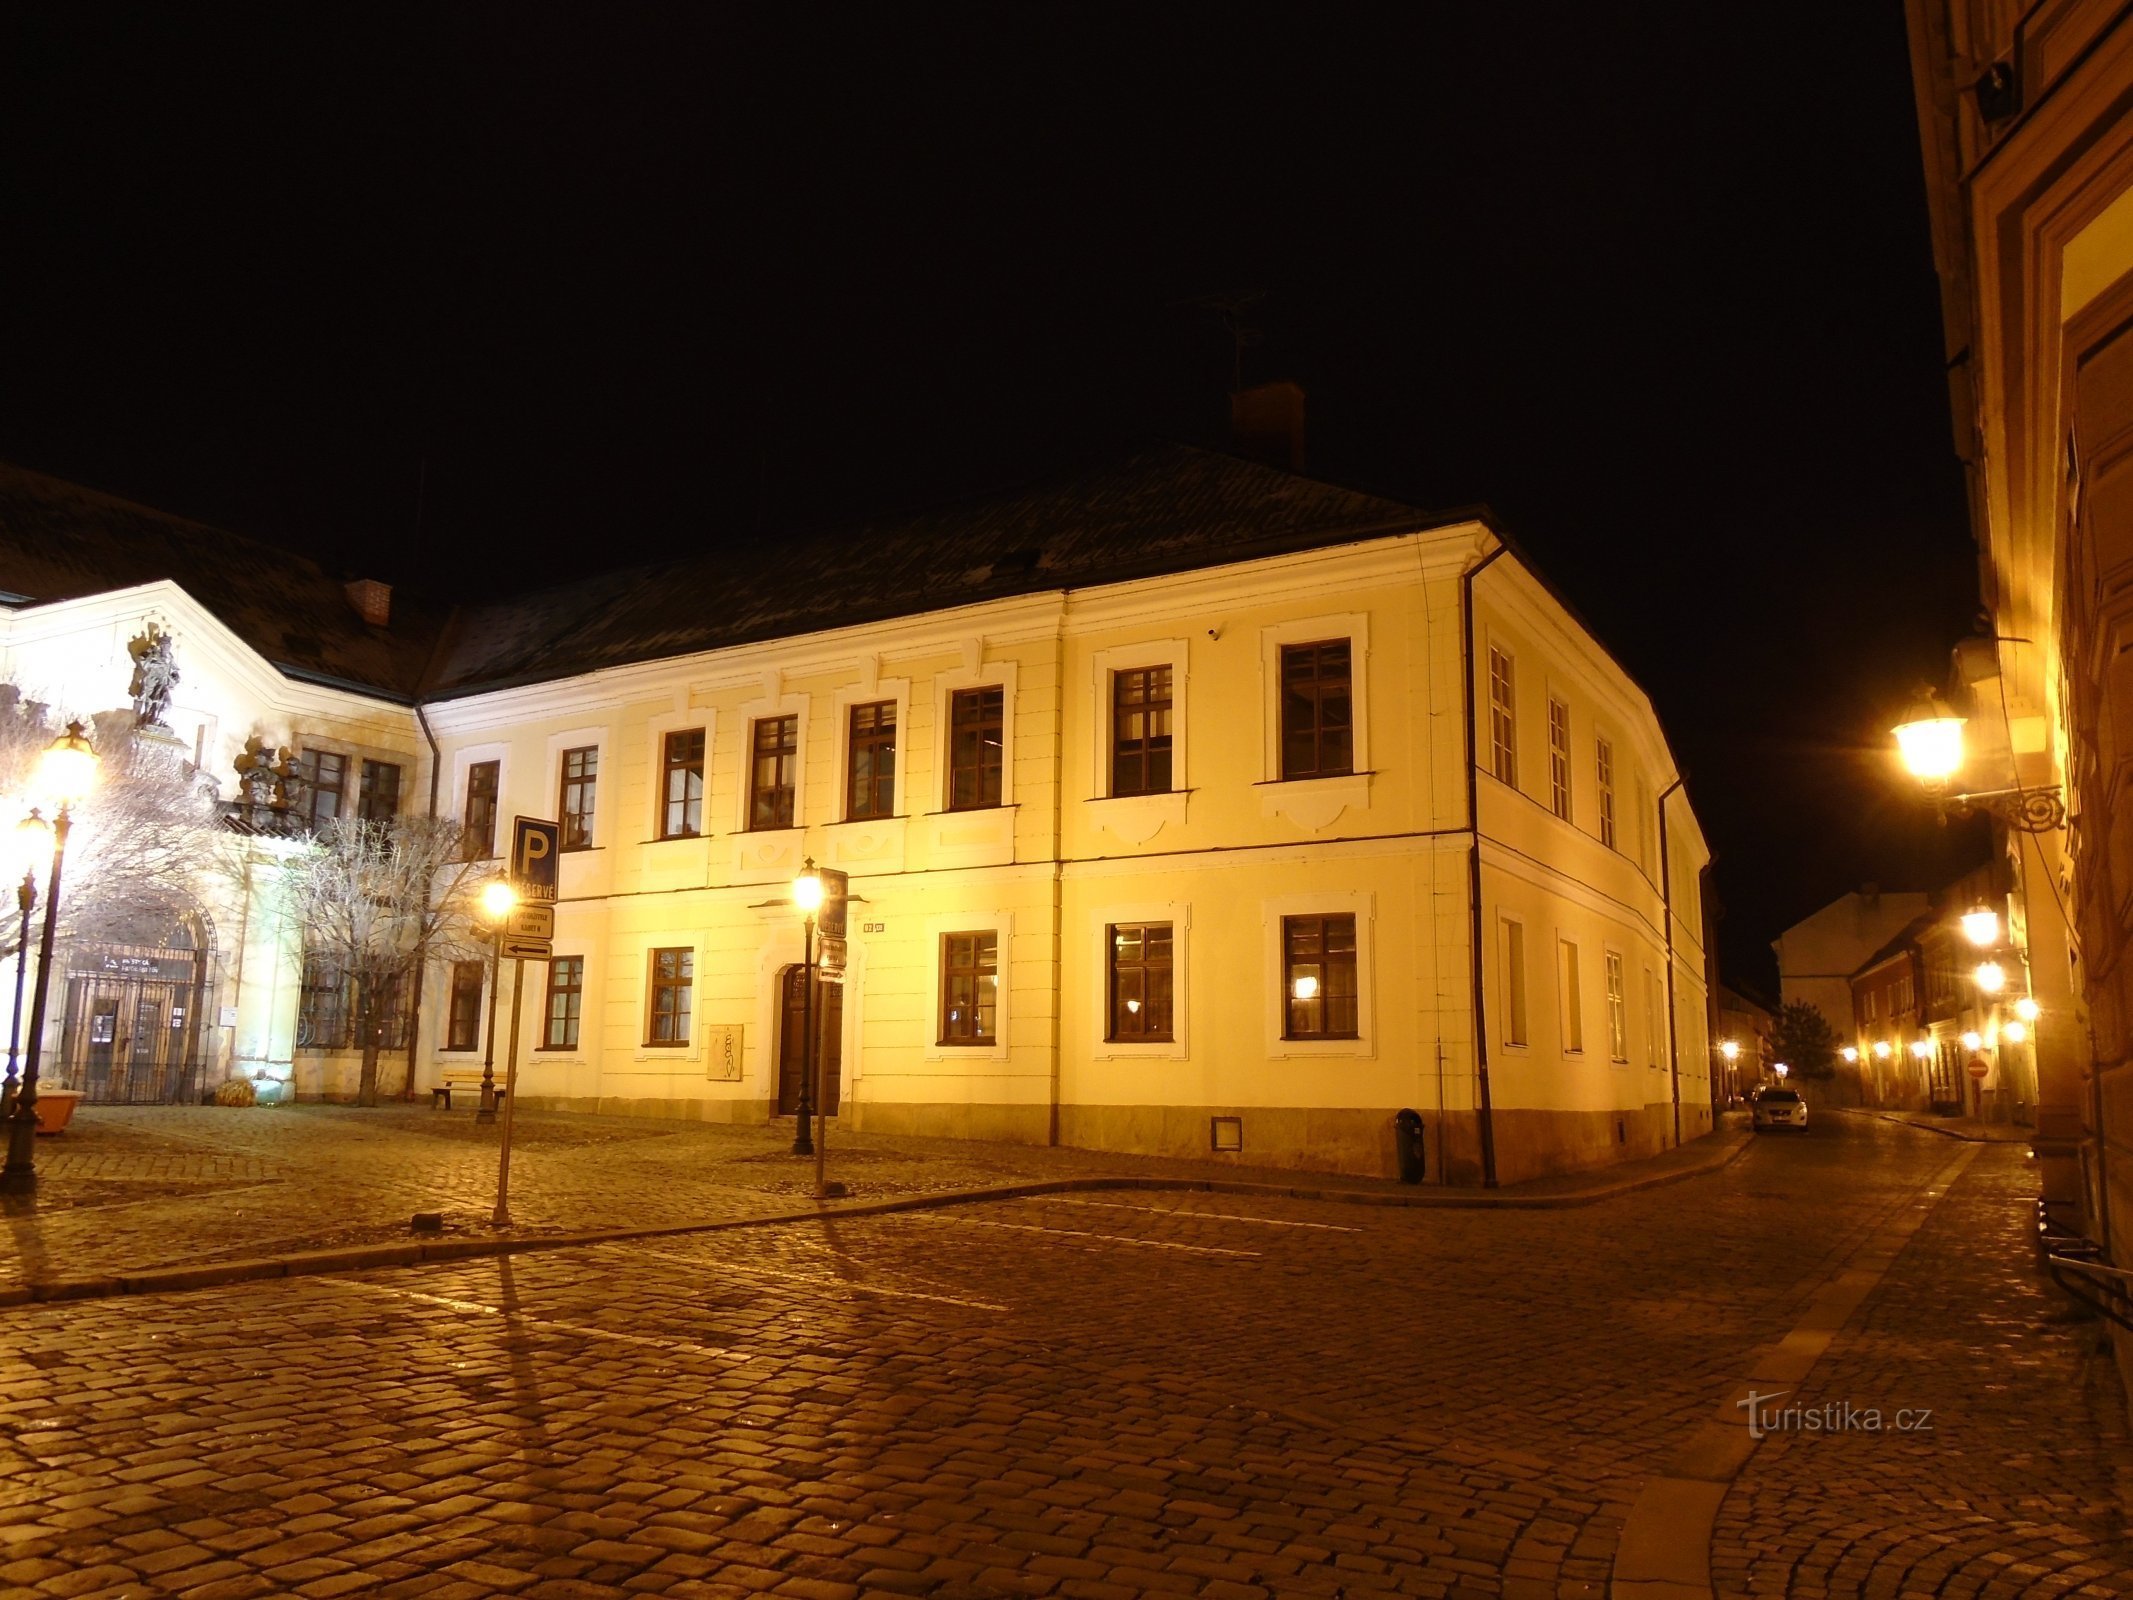 På slottet nr. 91 (Hradec Králové, 10.12.2017. oktober XNUMX)